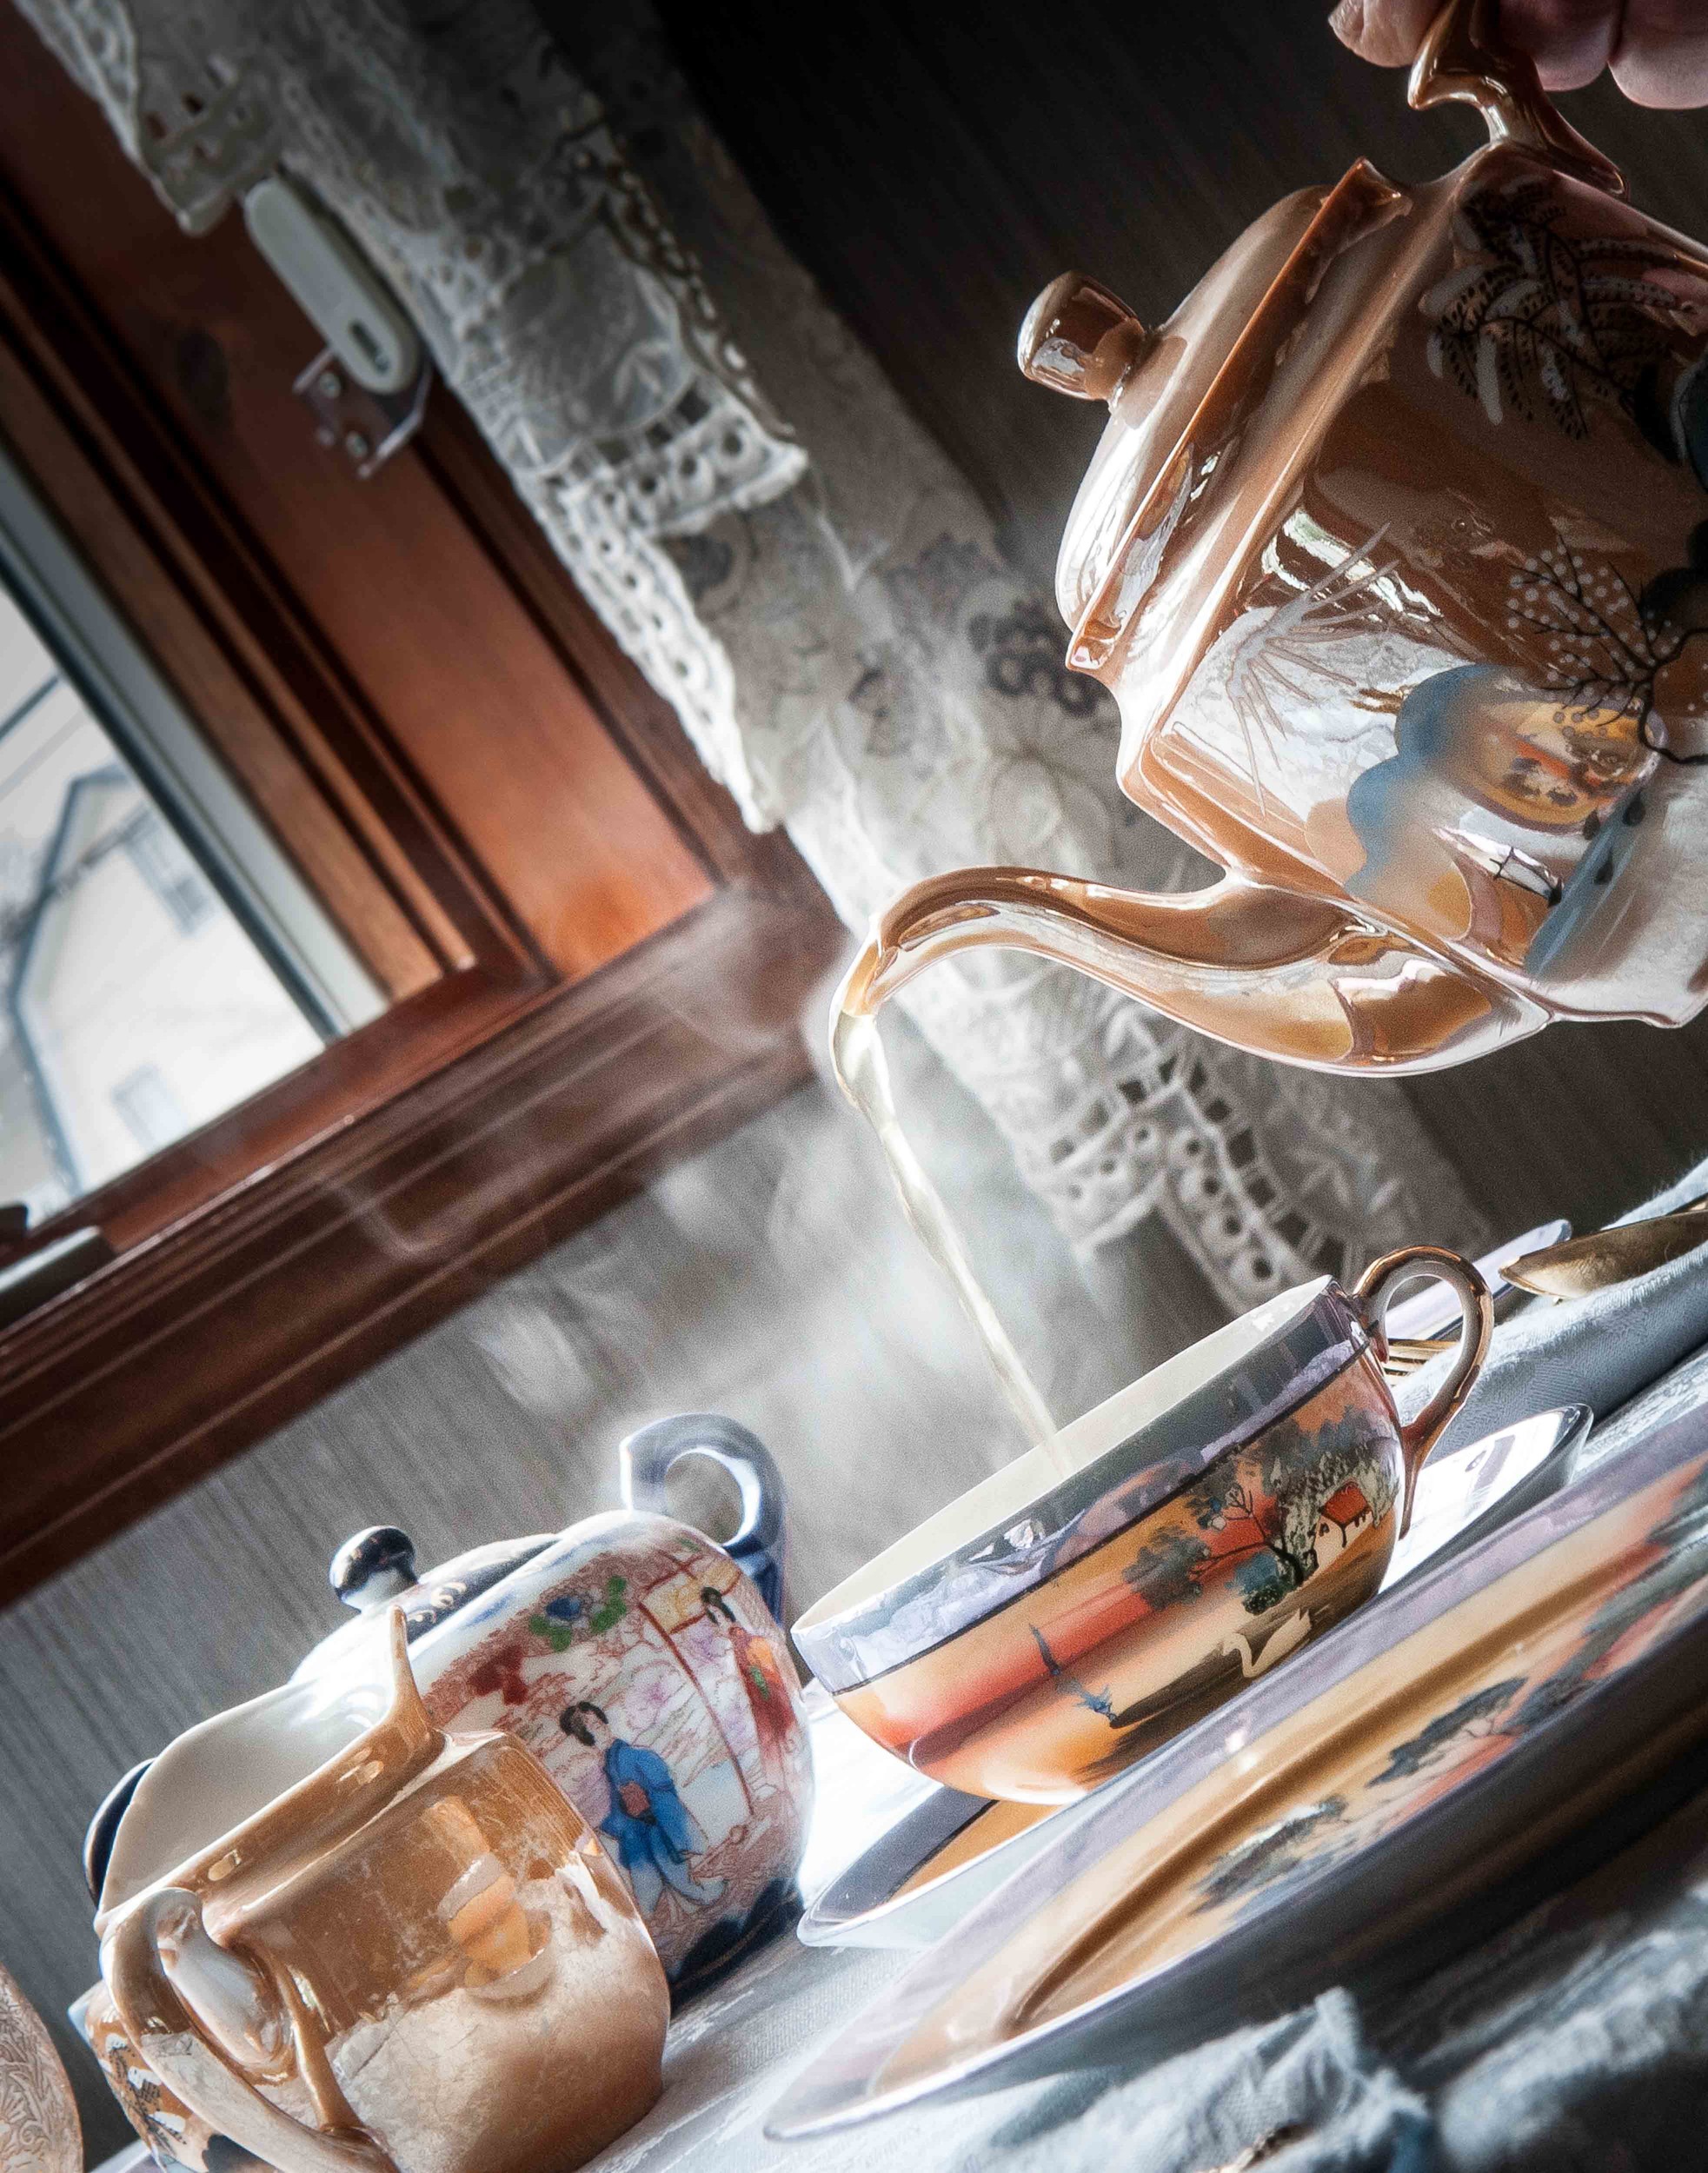 “Tea with Grandma” was photographed by Oceanside artist Barbara Cittadino.